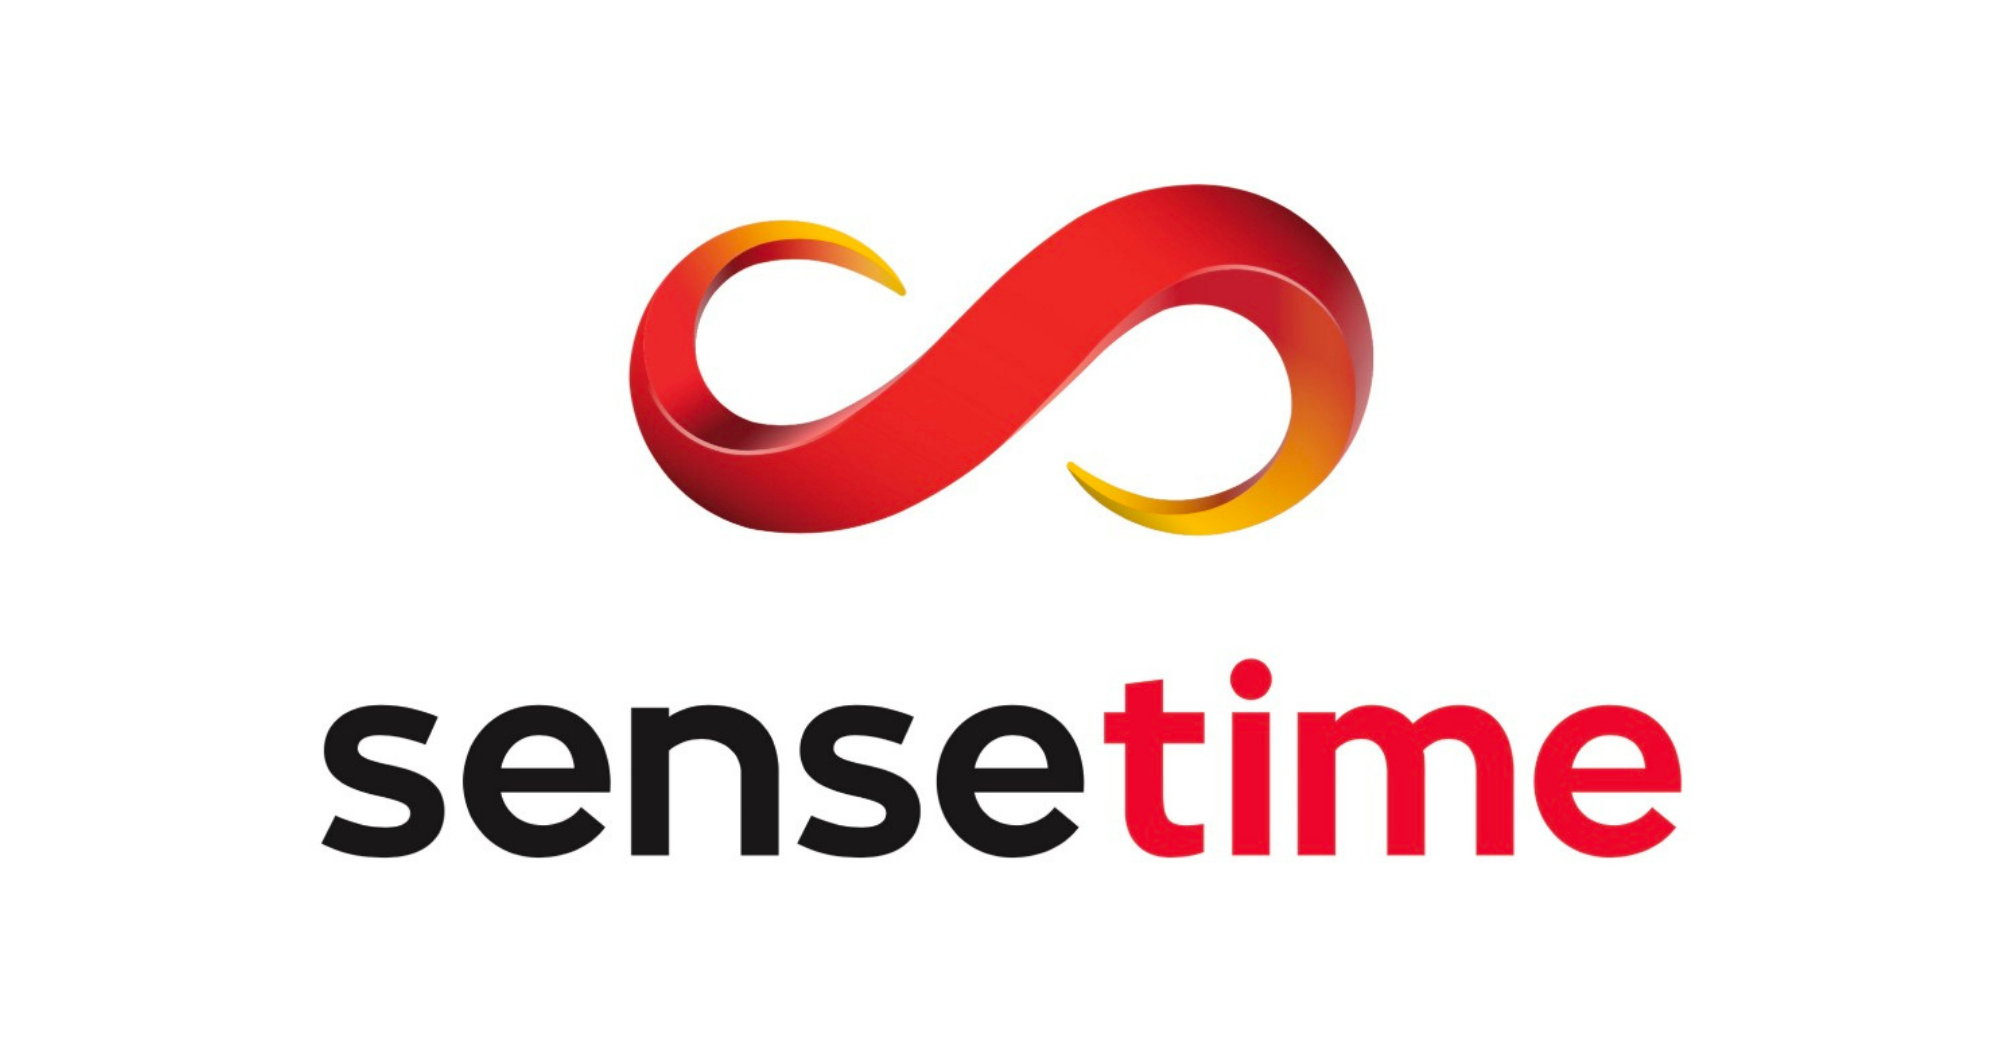 SenseTime သည် အစုရှယ်ယာ ၁. ၅ ဘီလီယံ ကိုဒေါ်လာ ၇ ၆၉. ၈ သန်းအထိ စတင် ရောင်းချ ခဲ့သည်